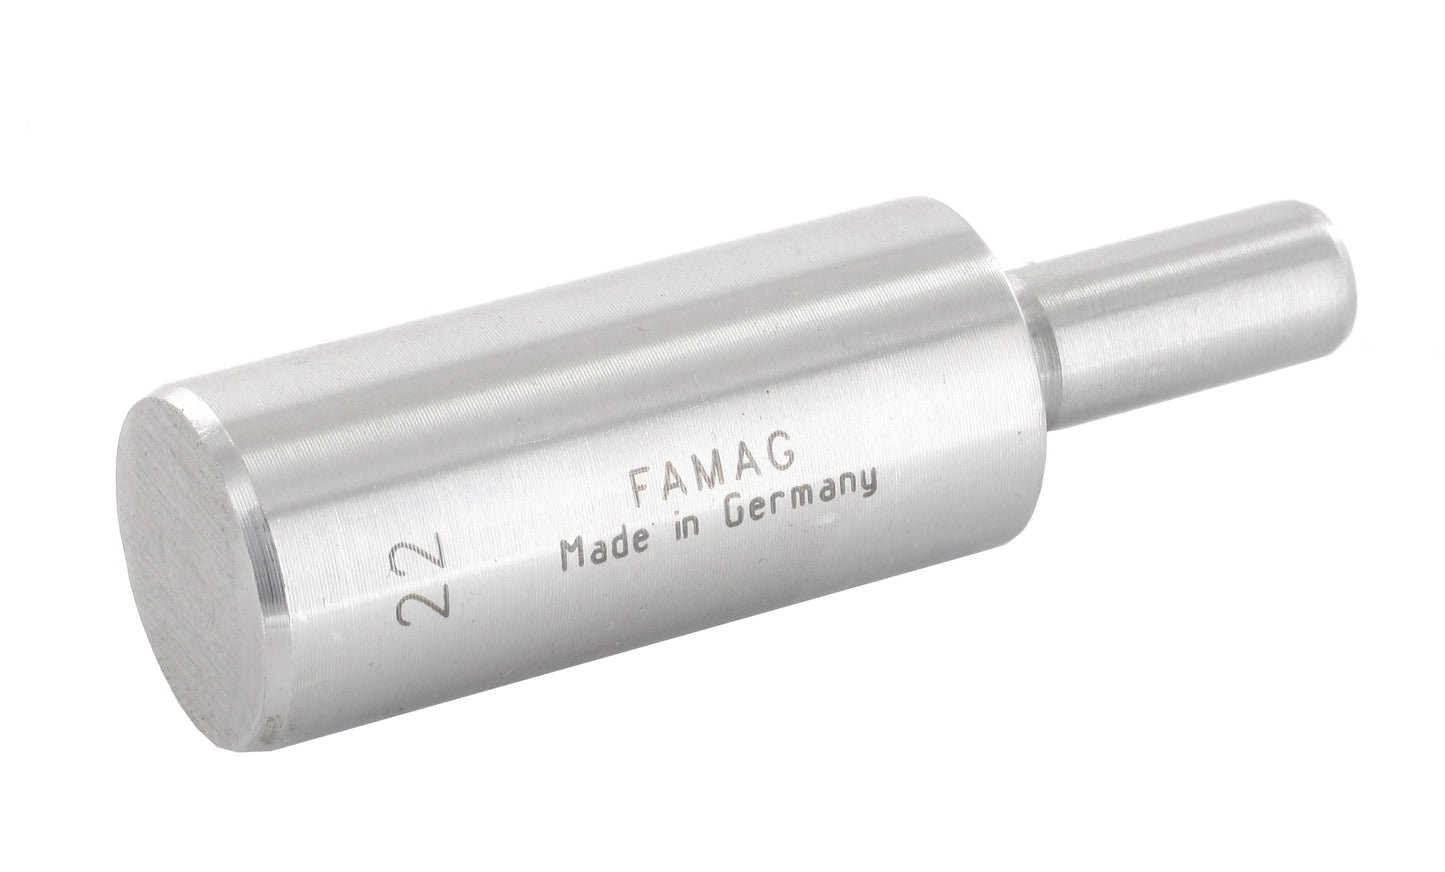 FAMAG 18 mm Guding Pin For Bormax 2.0 Prima 1614 Long Series 44.45mm - 120mm, 1619018